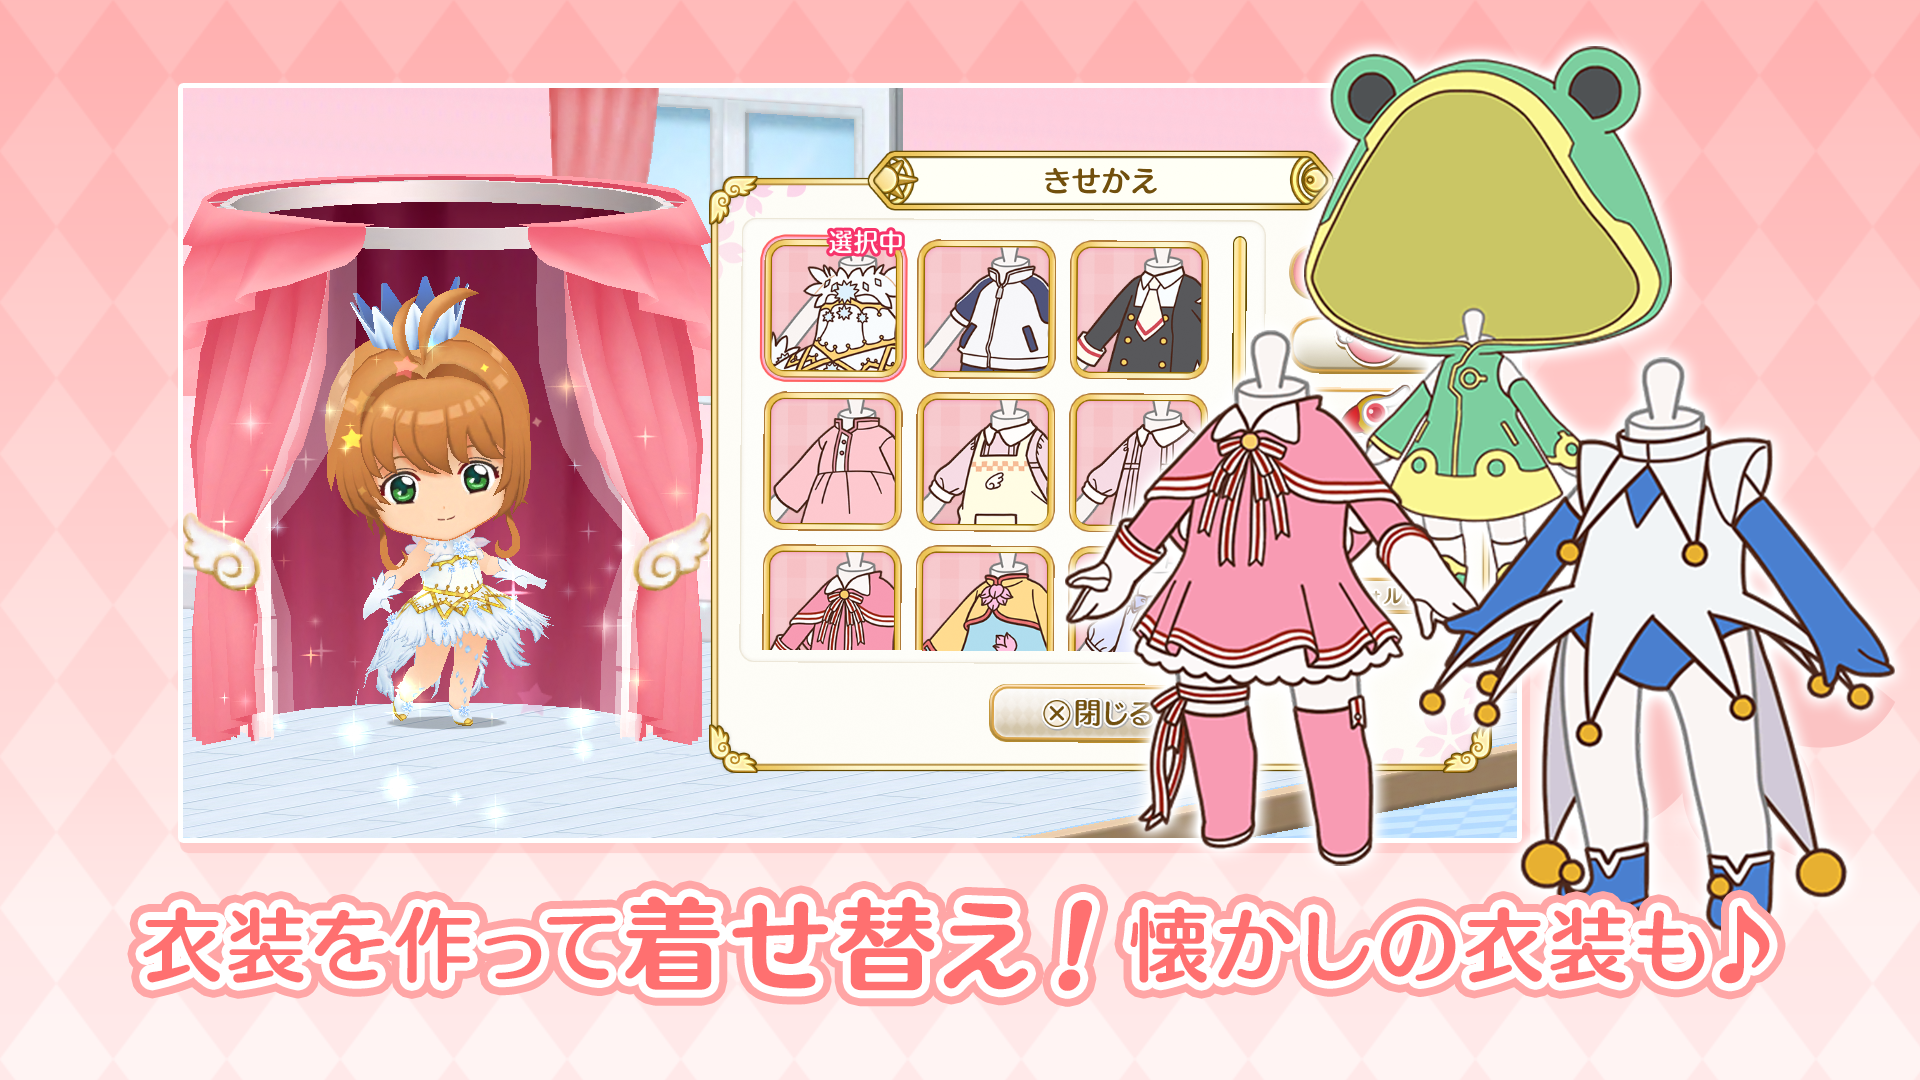 Cardcaptor Sakura Happy Memories android iOS apk download for free